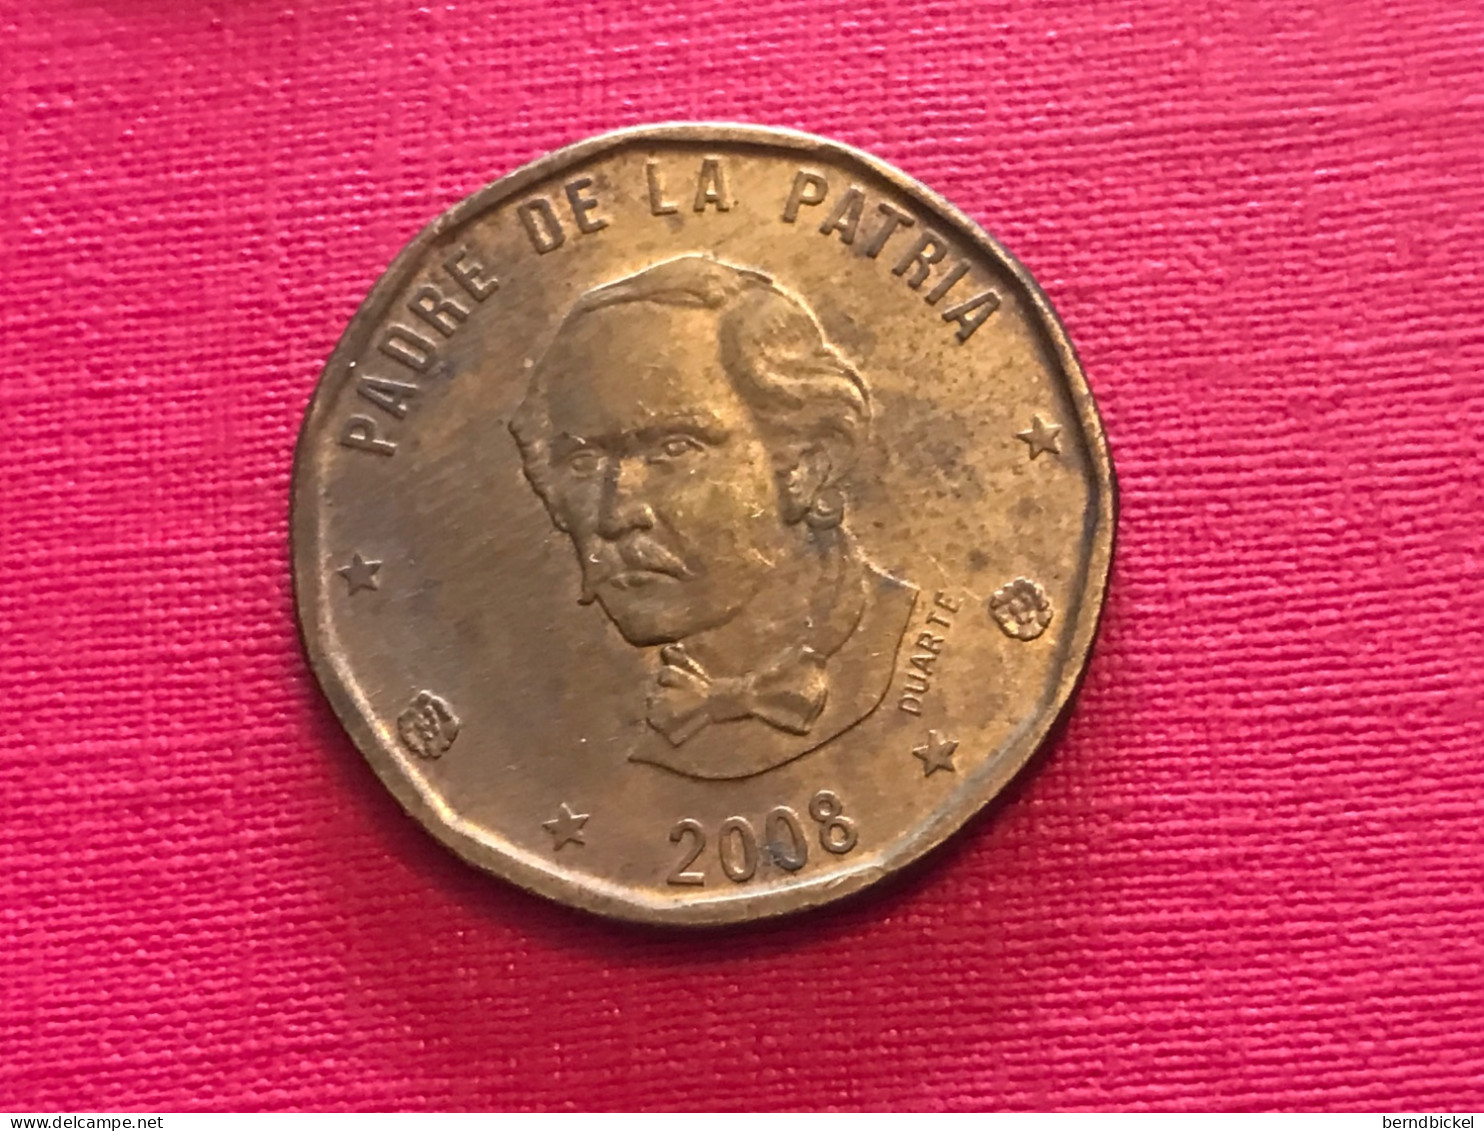 Münze Münzen Umlaufmünze Dominikanische Republik 1 Peso 2008 - Dominicaine